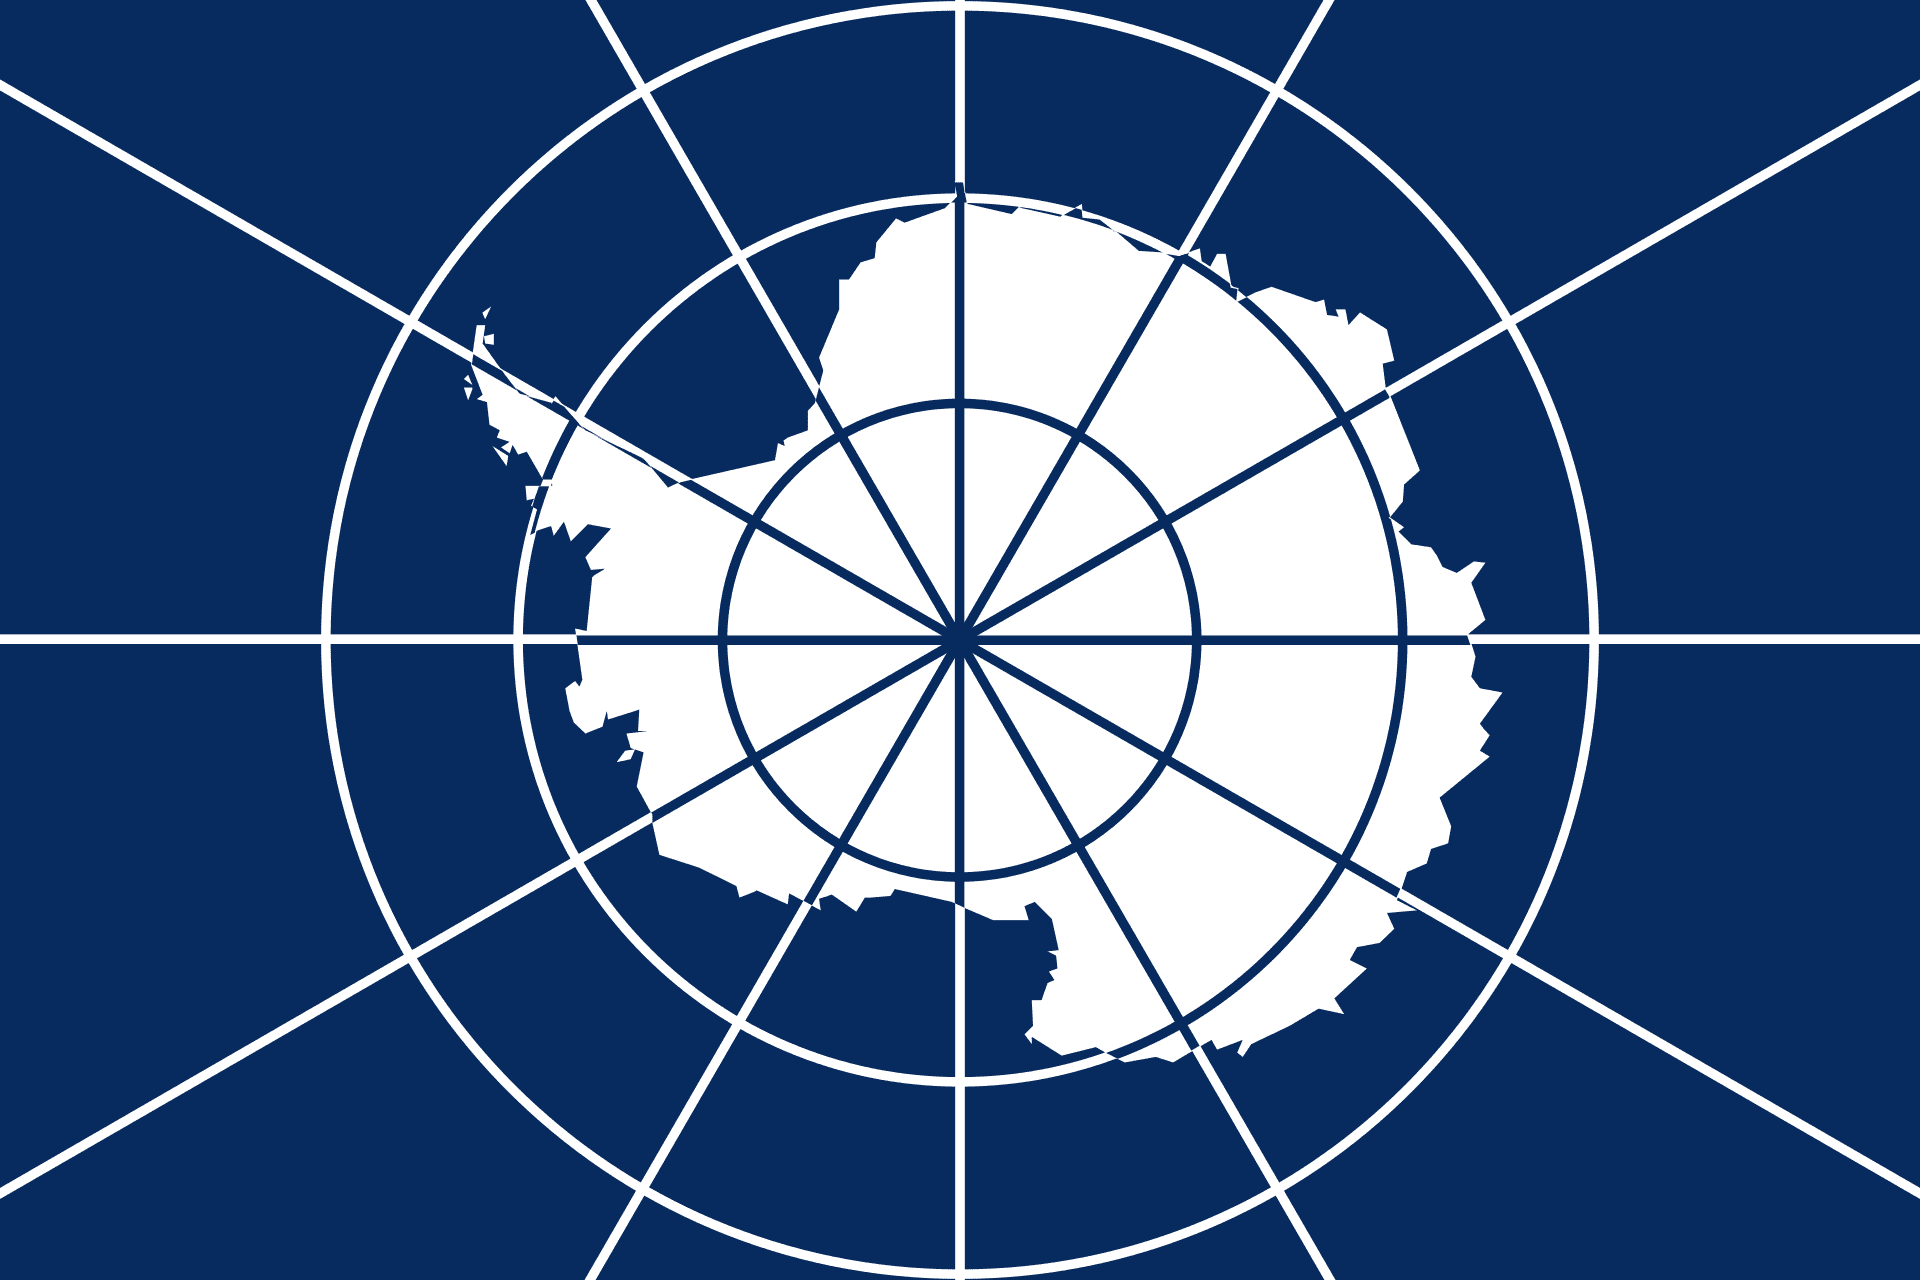 Emblem of the Antarctic Treaty.